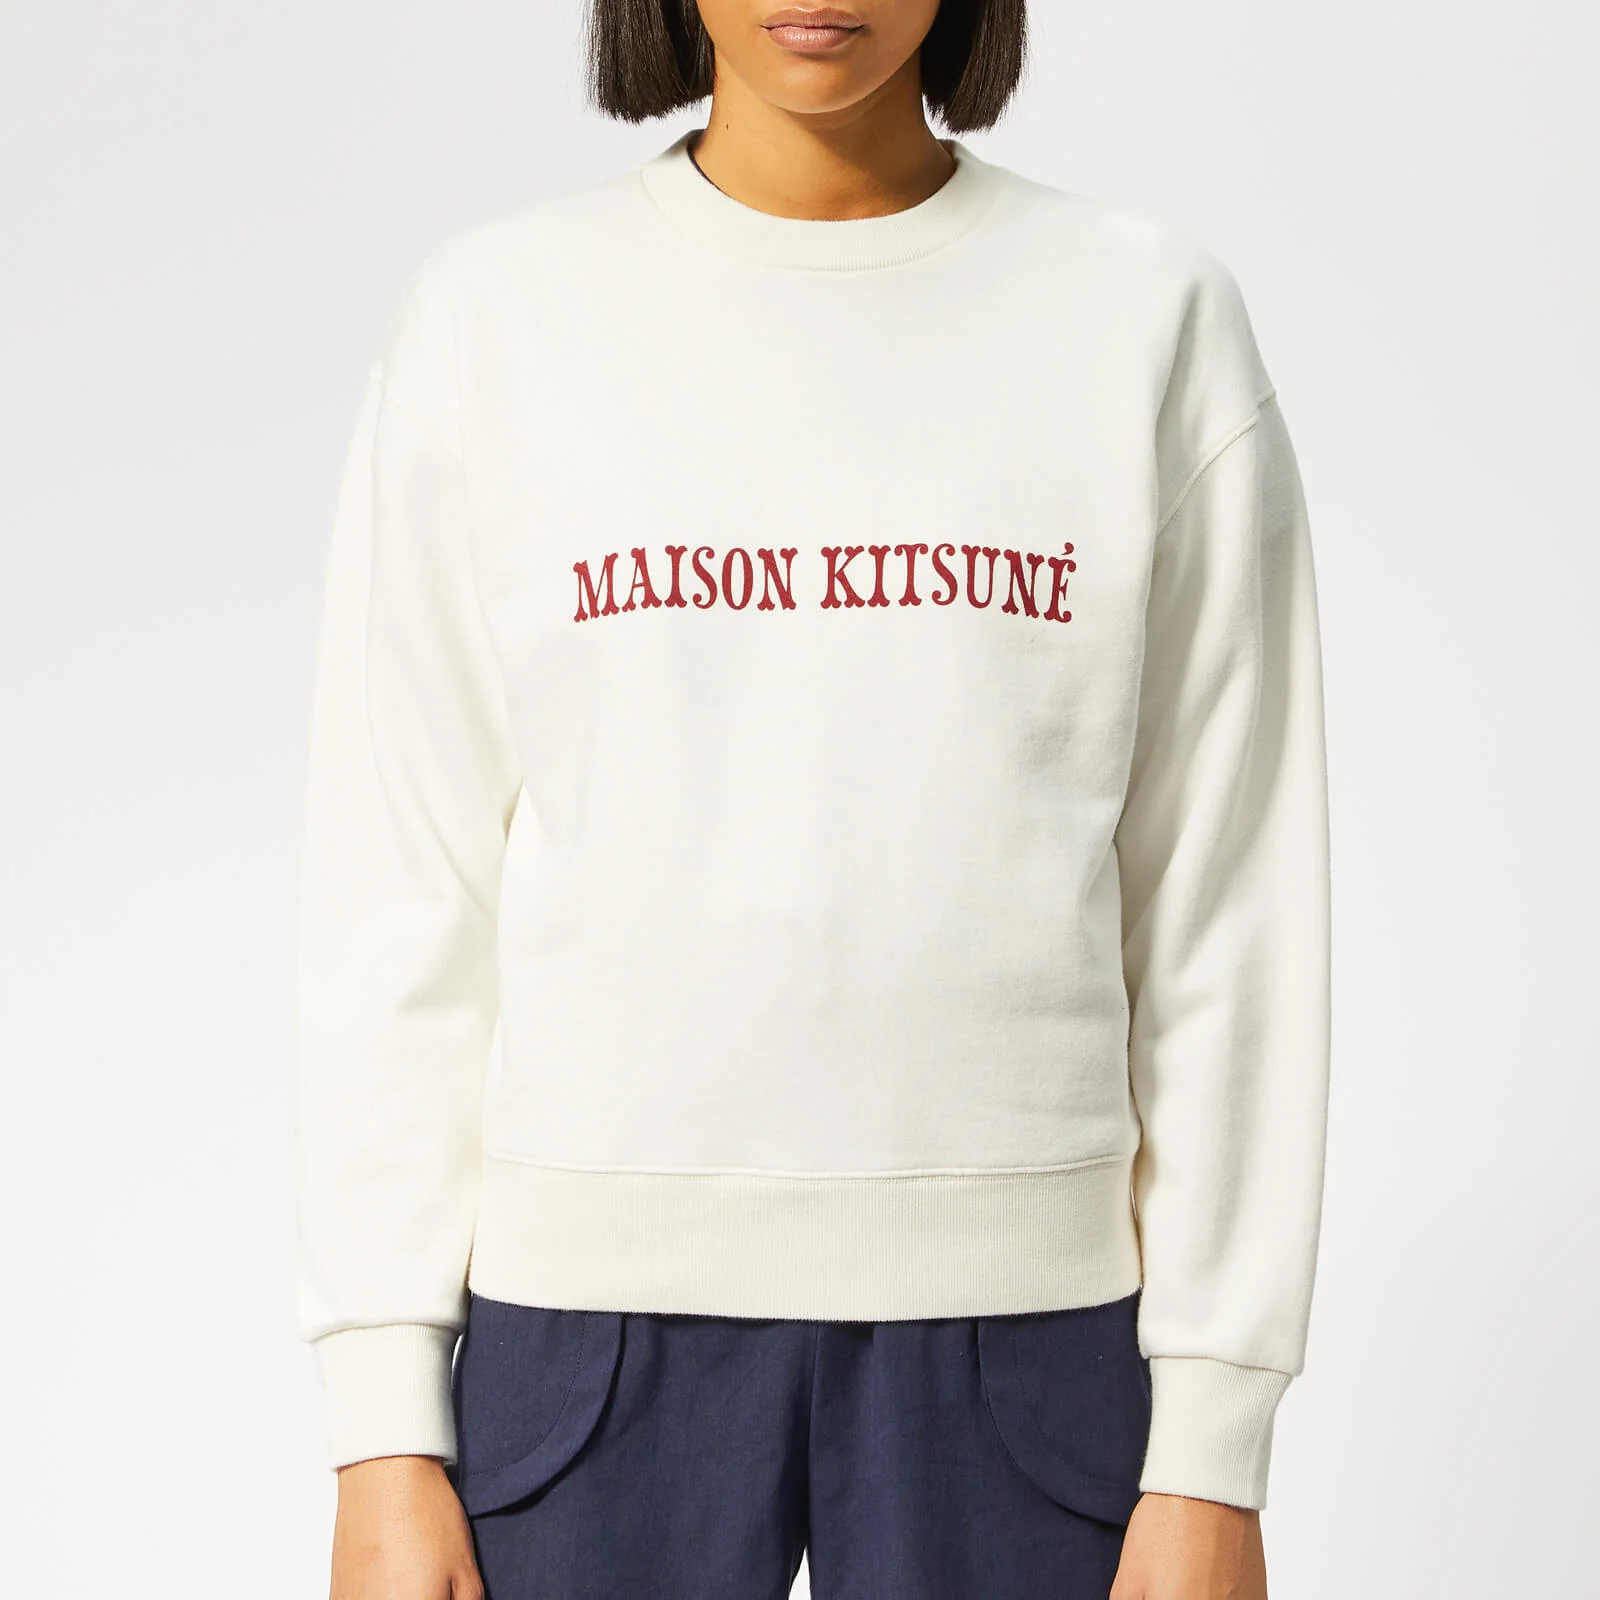 Maison Kitsuné Women's Sweatshirt - Ecru Image 1